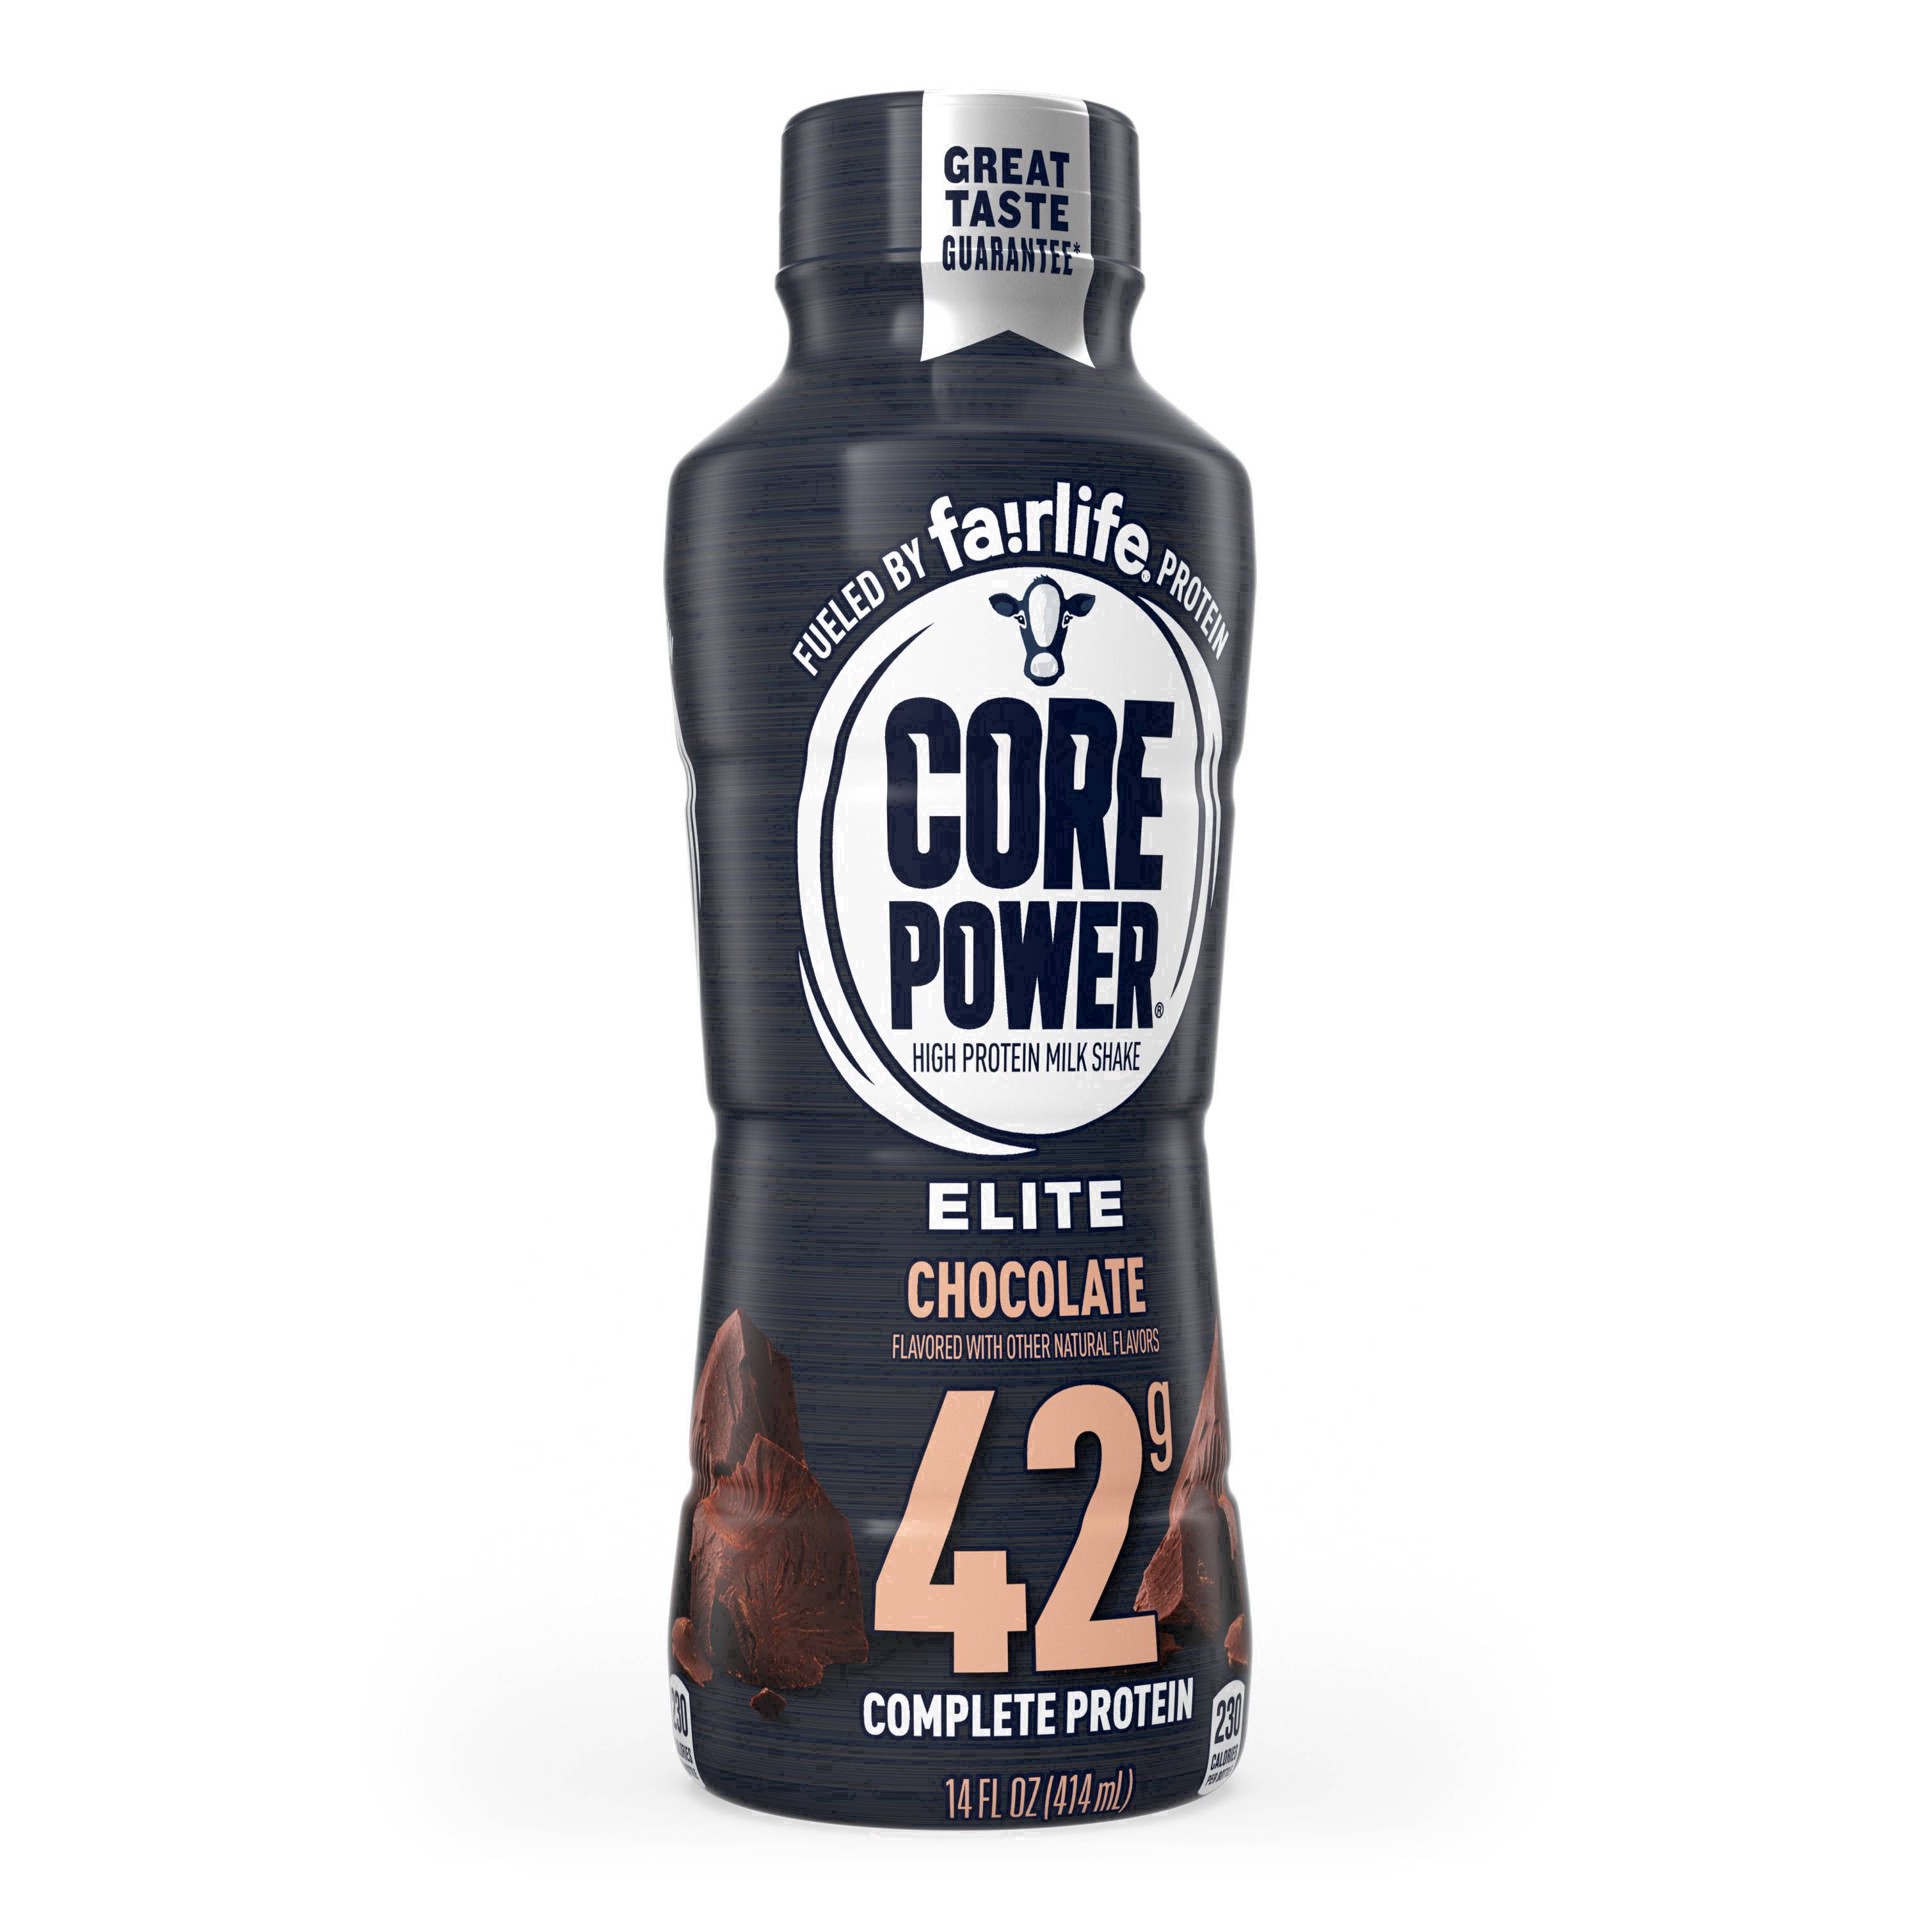 slide 105 of 106, Core Power Elite High Protein Chocolate Milk Shake 14 fl oz, 42 gram, 14 oz